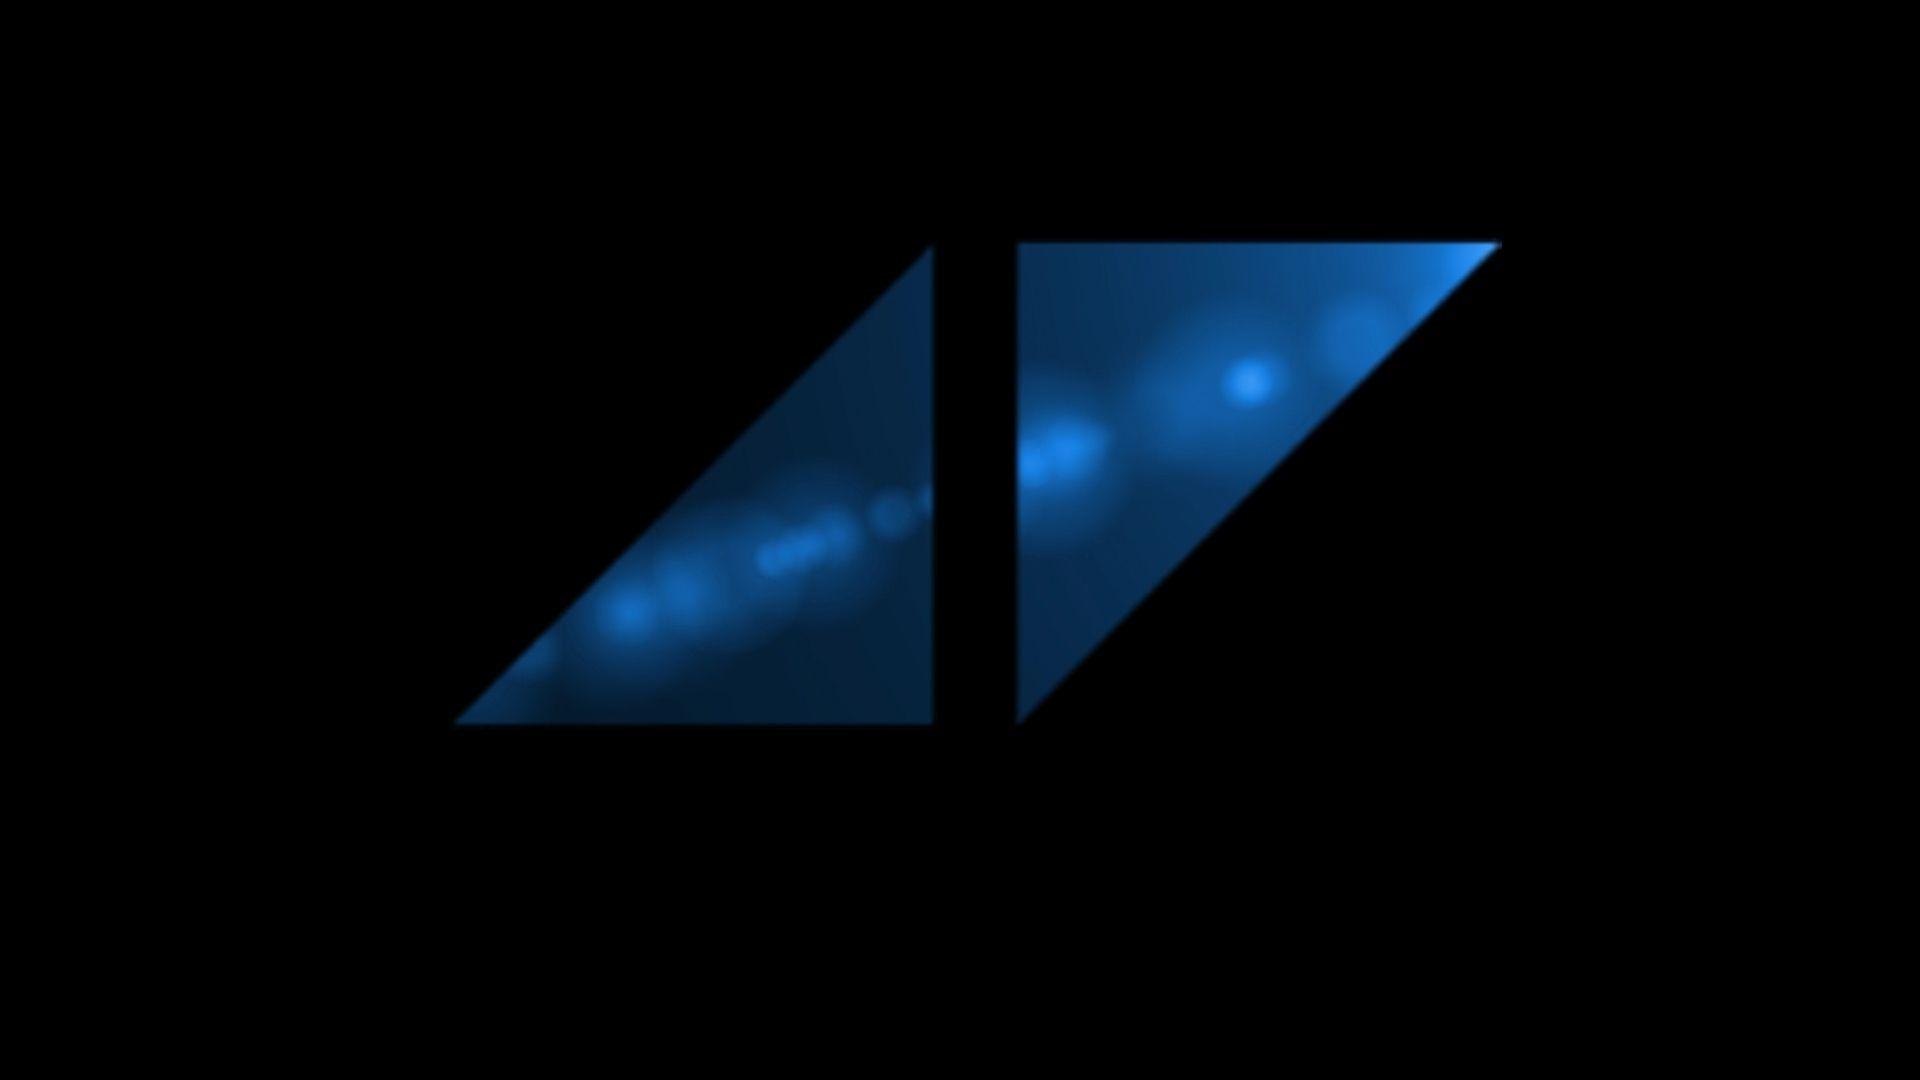 Avicii Big Logo Image HD Desktop Wallpaper, Instagram photo